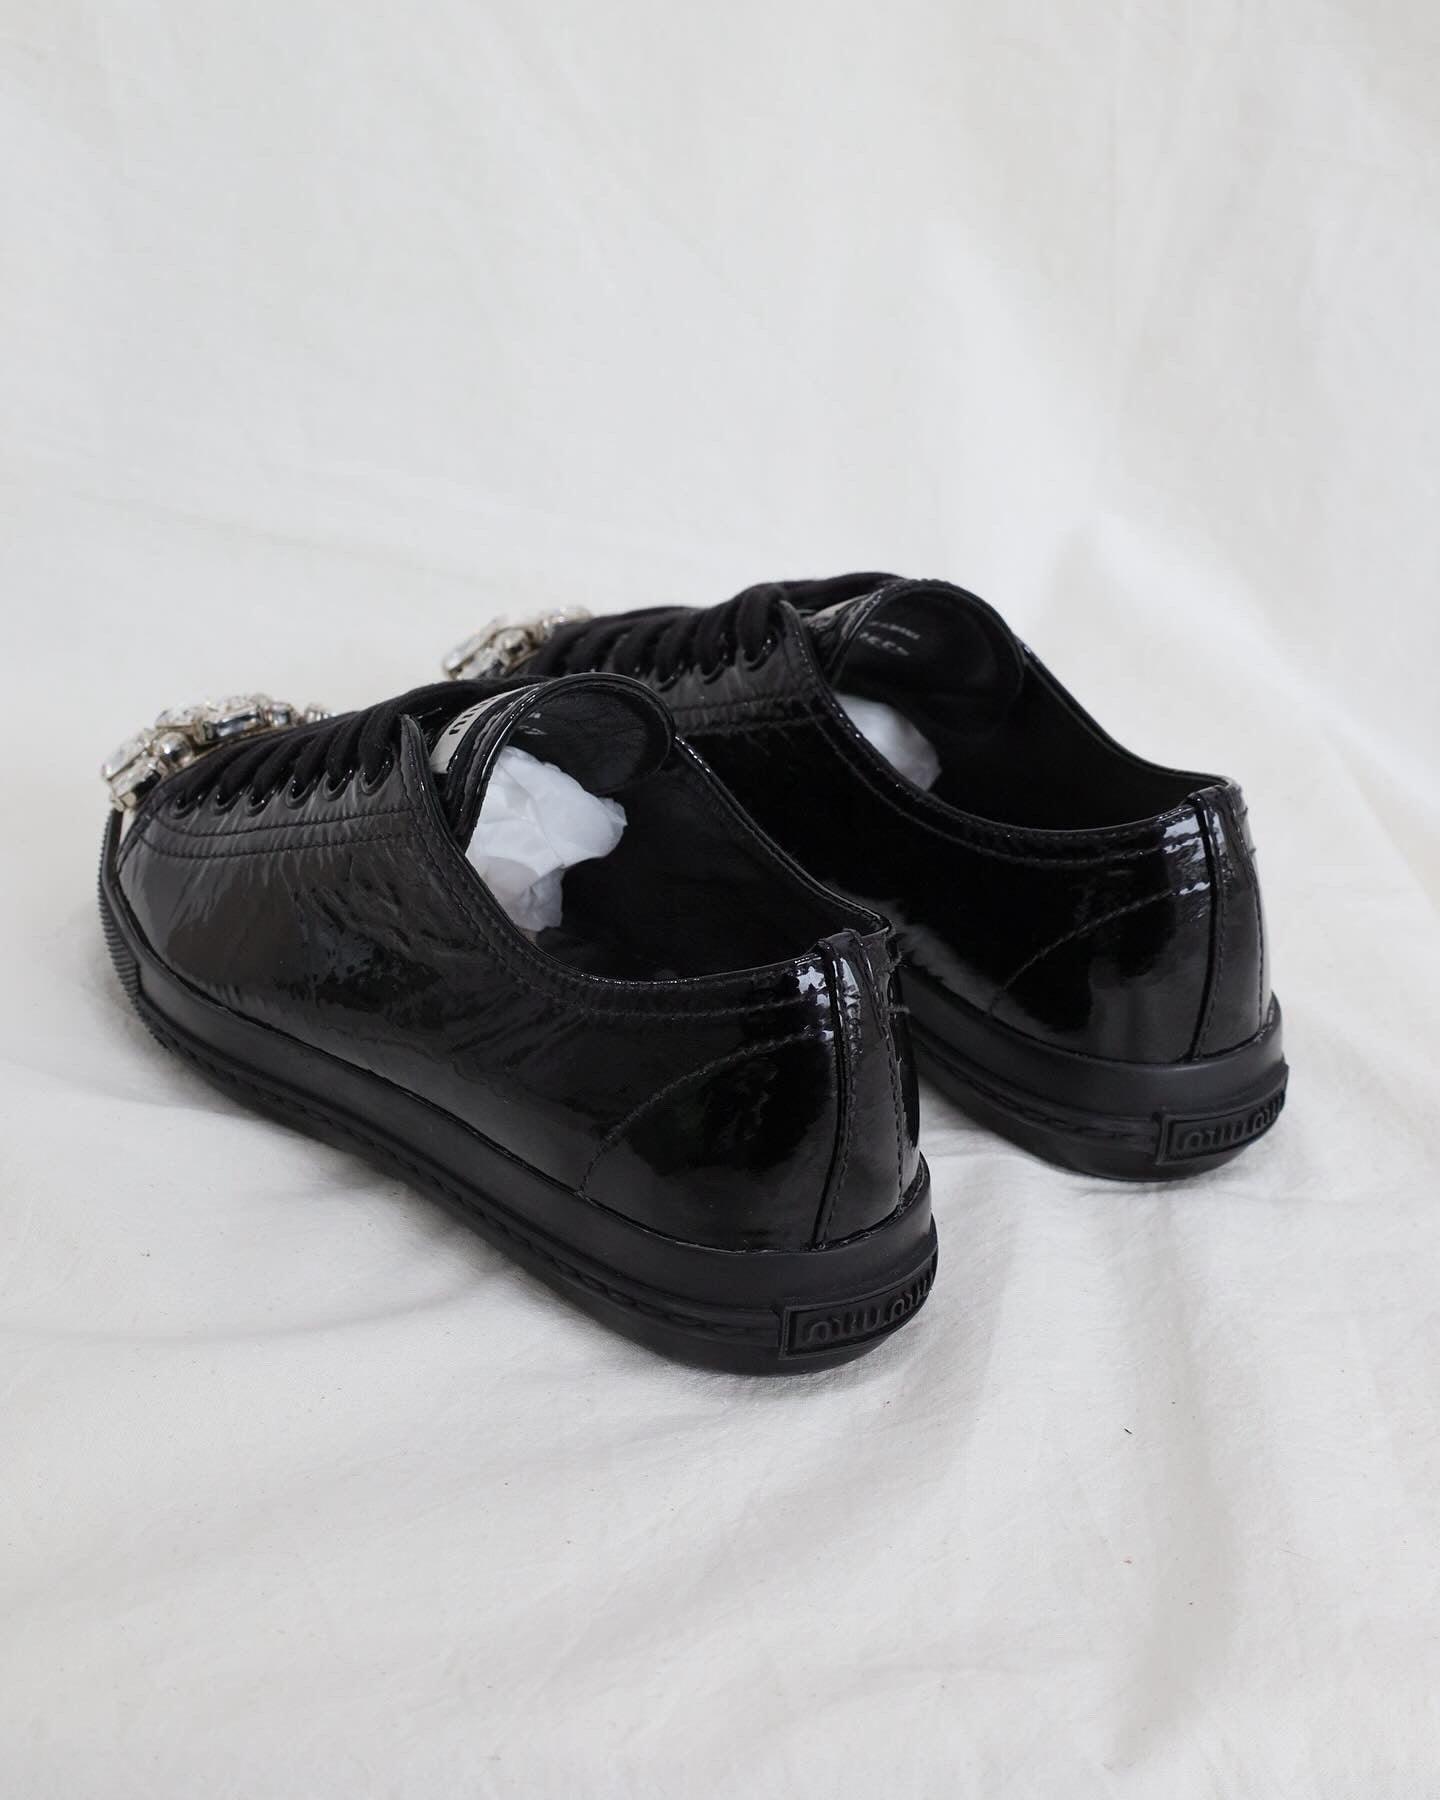 MIU MIU Crystal Sneakers 36,5 - THE VOG CLOSET